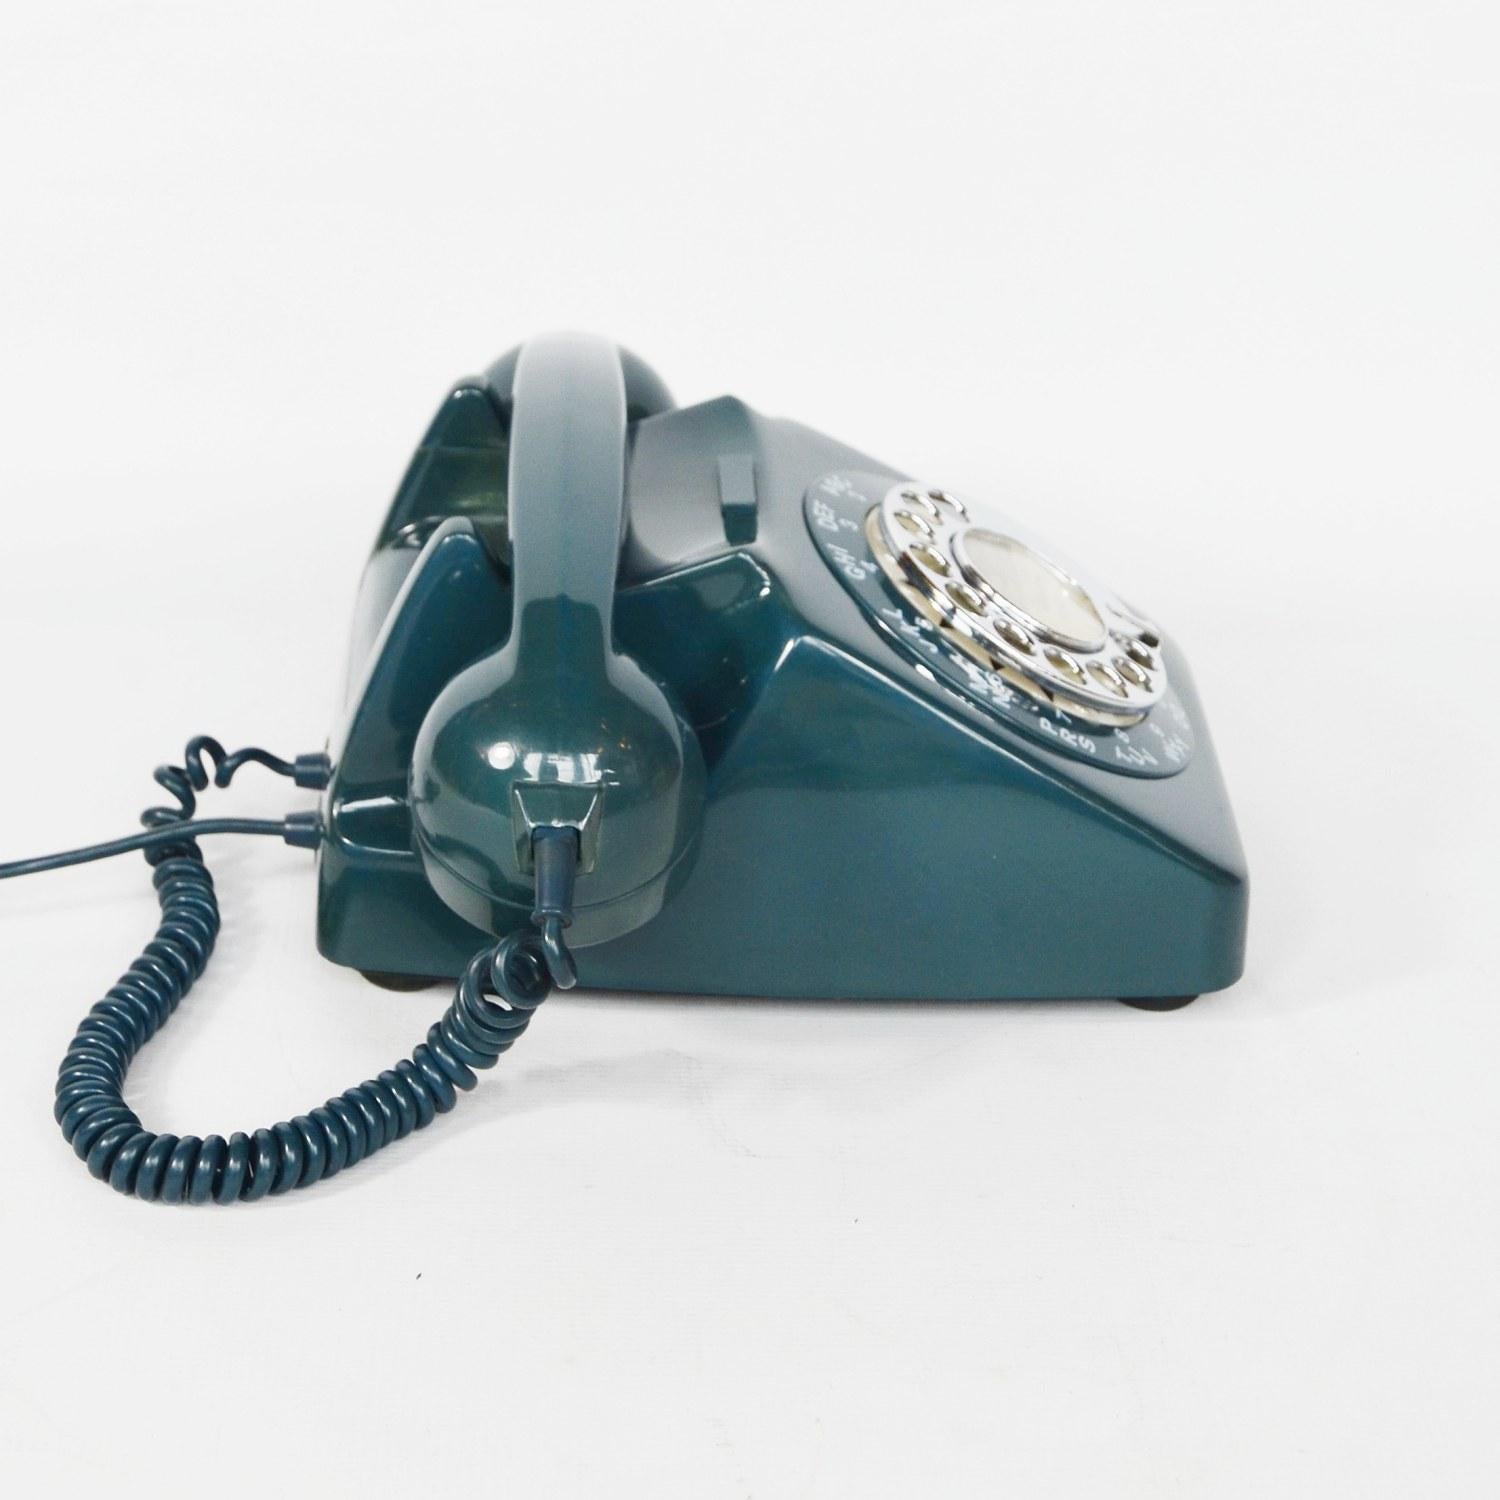 Late 20th Century Original 1970s Model 746L Telephone Full Working Order